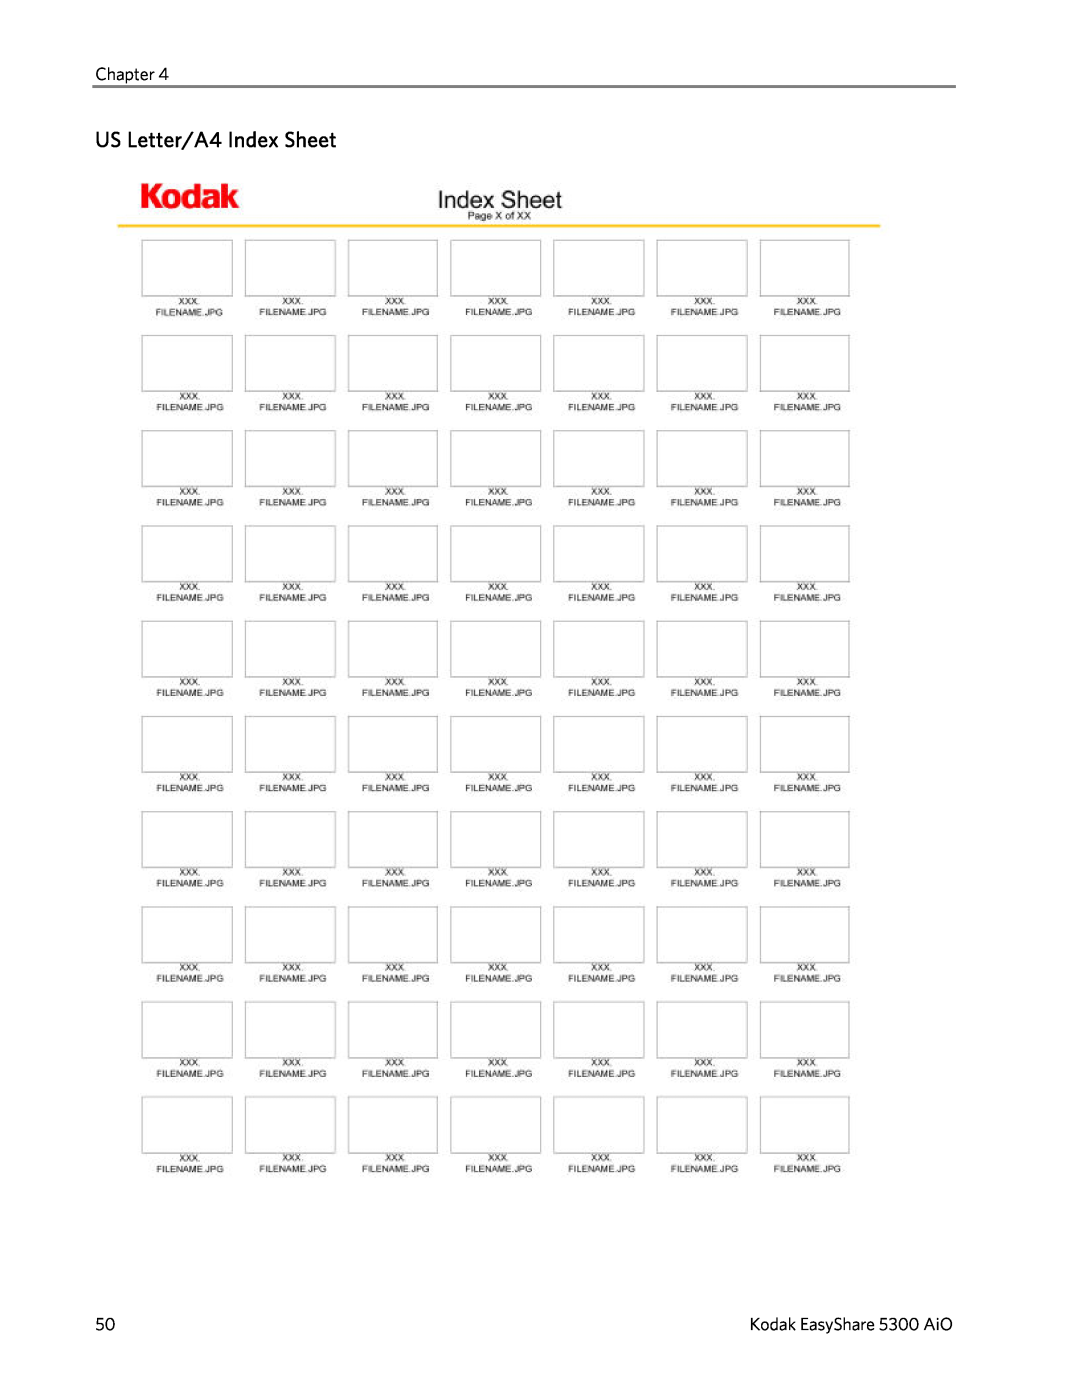 Kodak 5300 manual US Letter/A4 Index Sheet, Chapter 